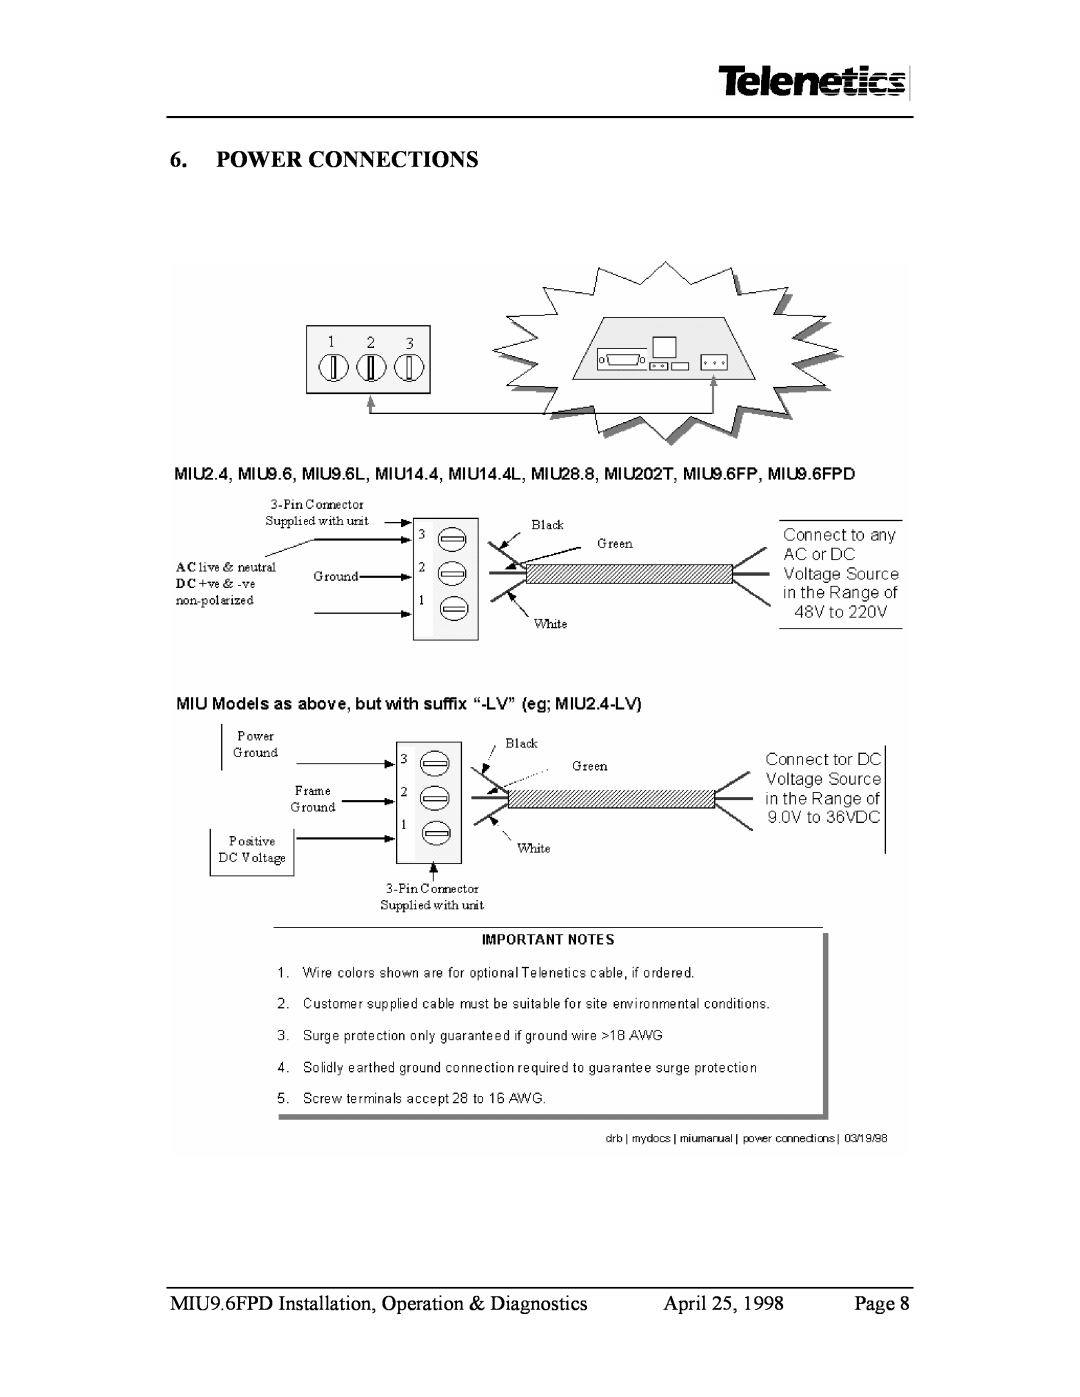 Telenetics manual Power Connections, MIU9.6FPD Installation, Operation & Diagnostics, April 25, Page 